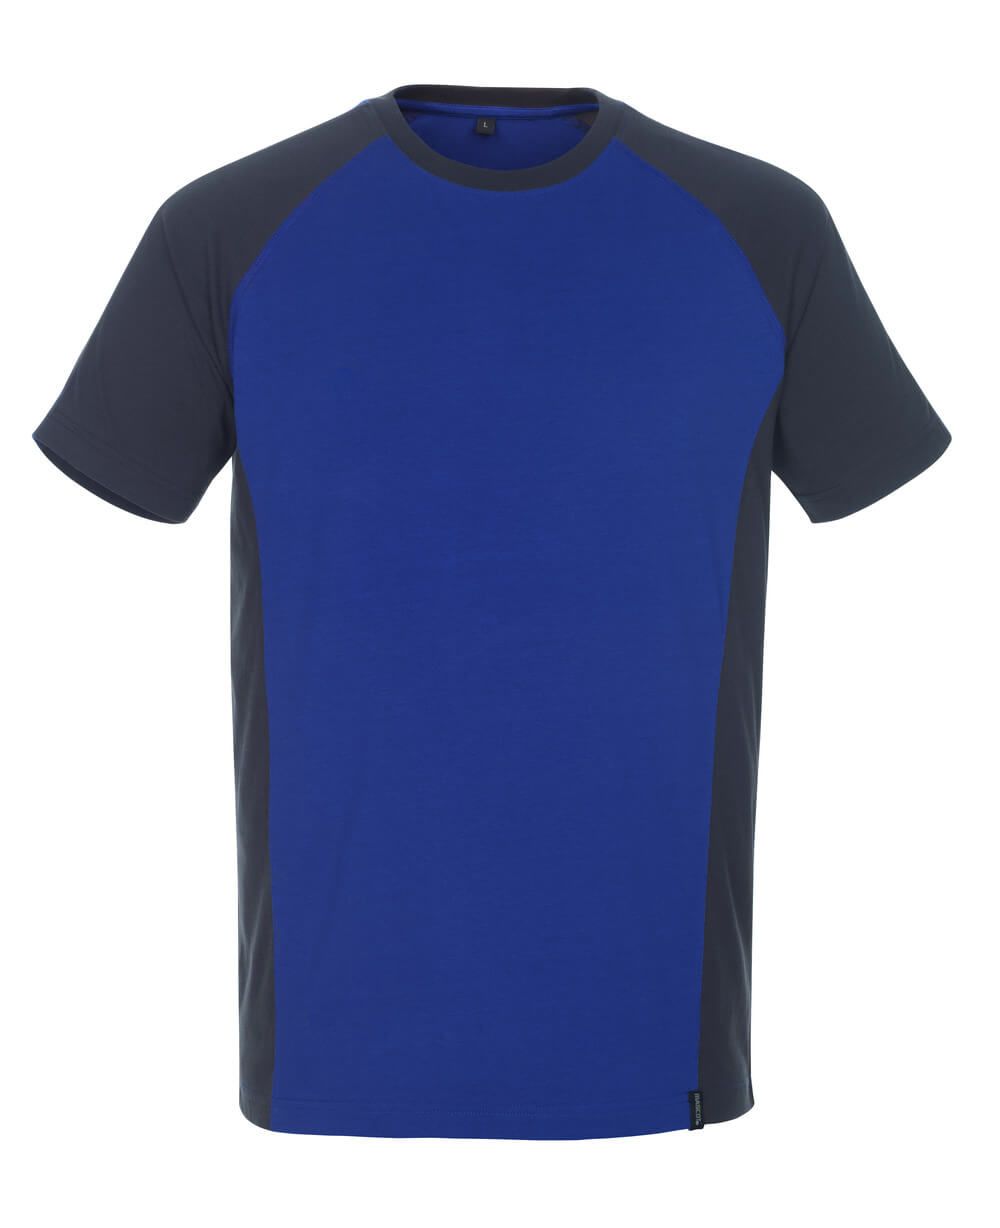 Mascot Workwear Dark Navy, Royal Blue Cotton, Polyester Short Sleeve T-Shirt, UK- S, EUR- S